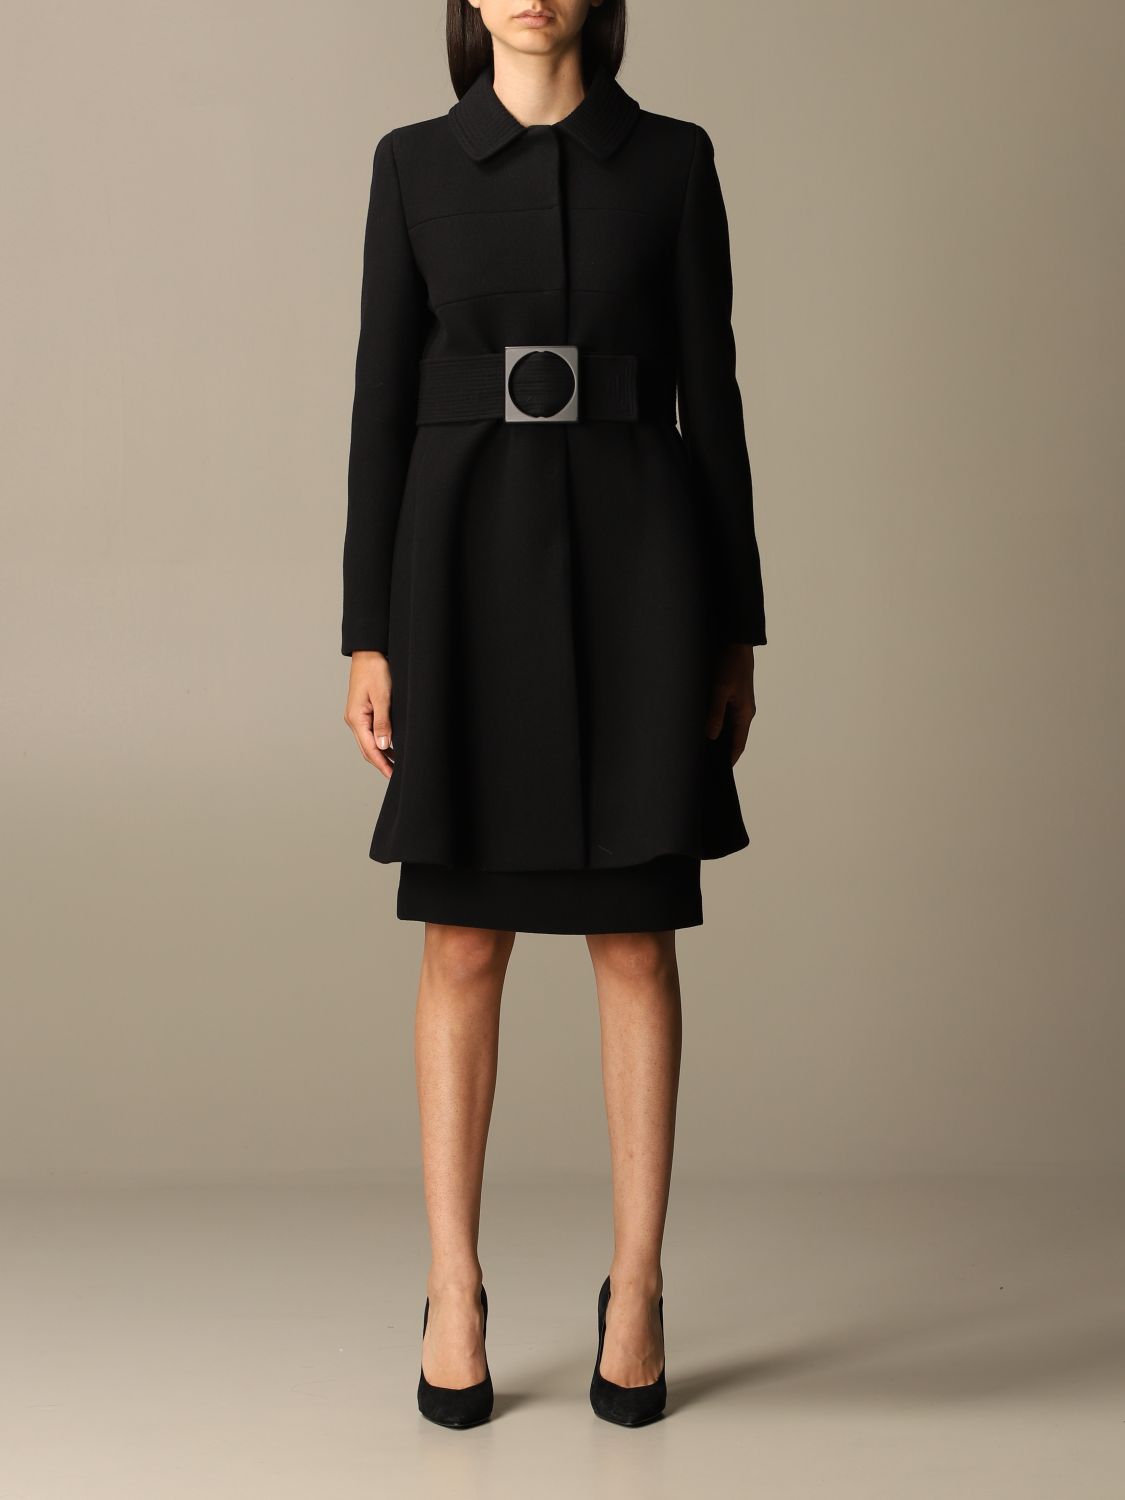 Emporio Armani Outlet: coat for women - Black | Emporio Armani coat ...